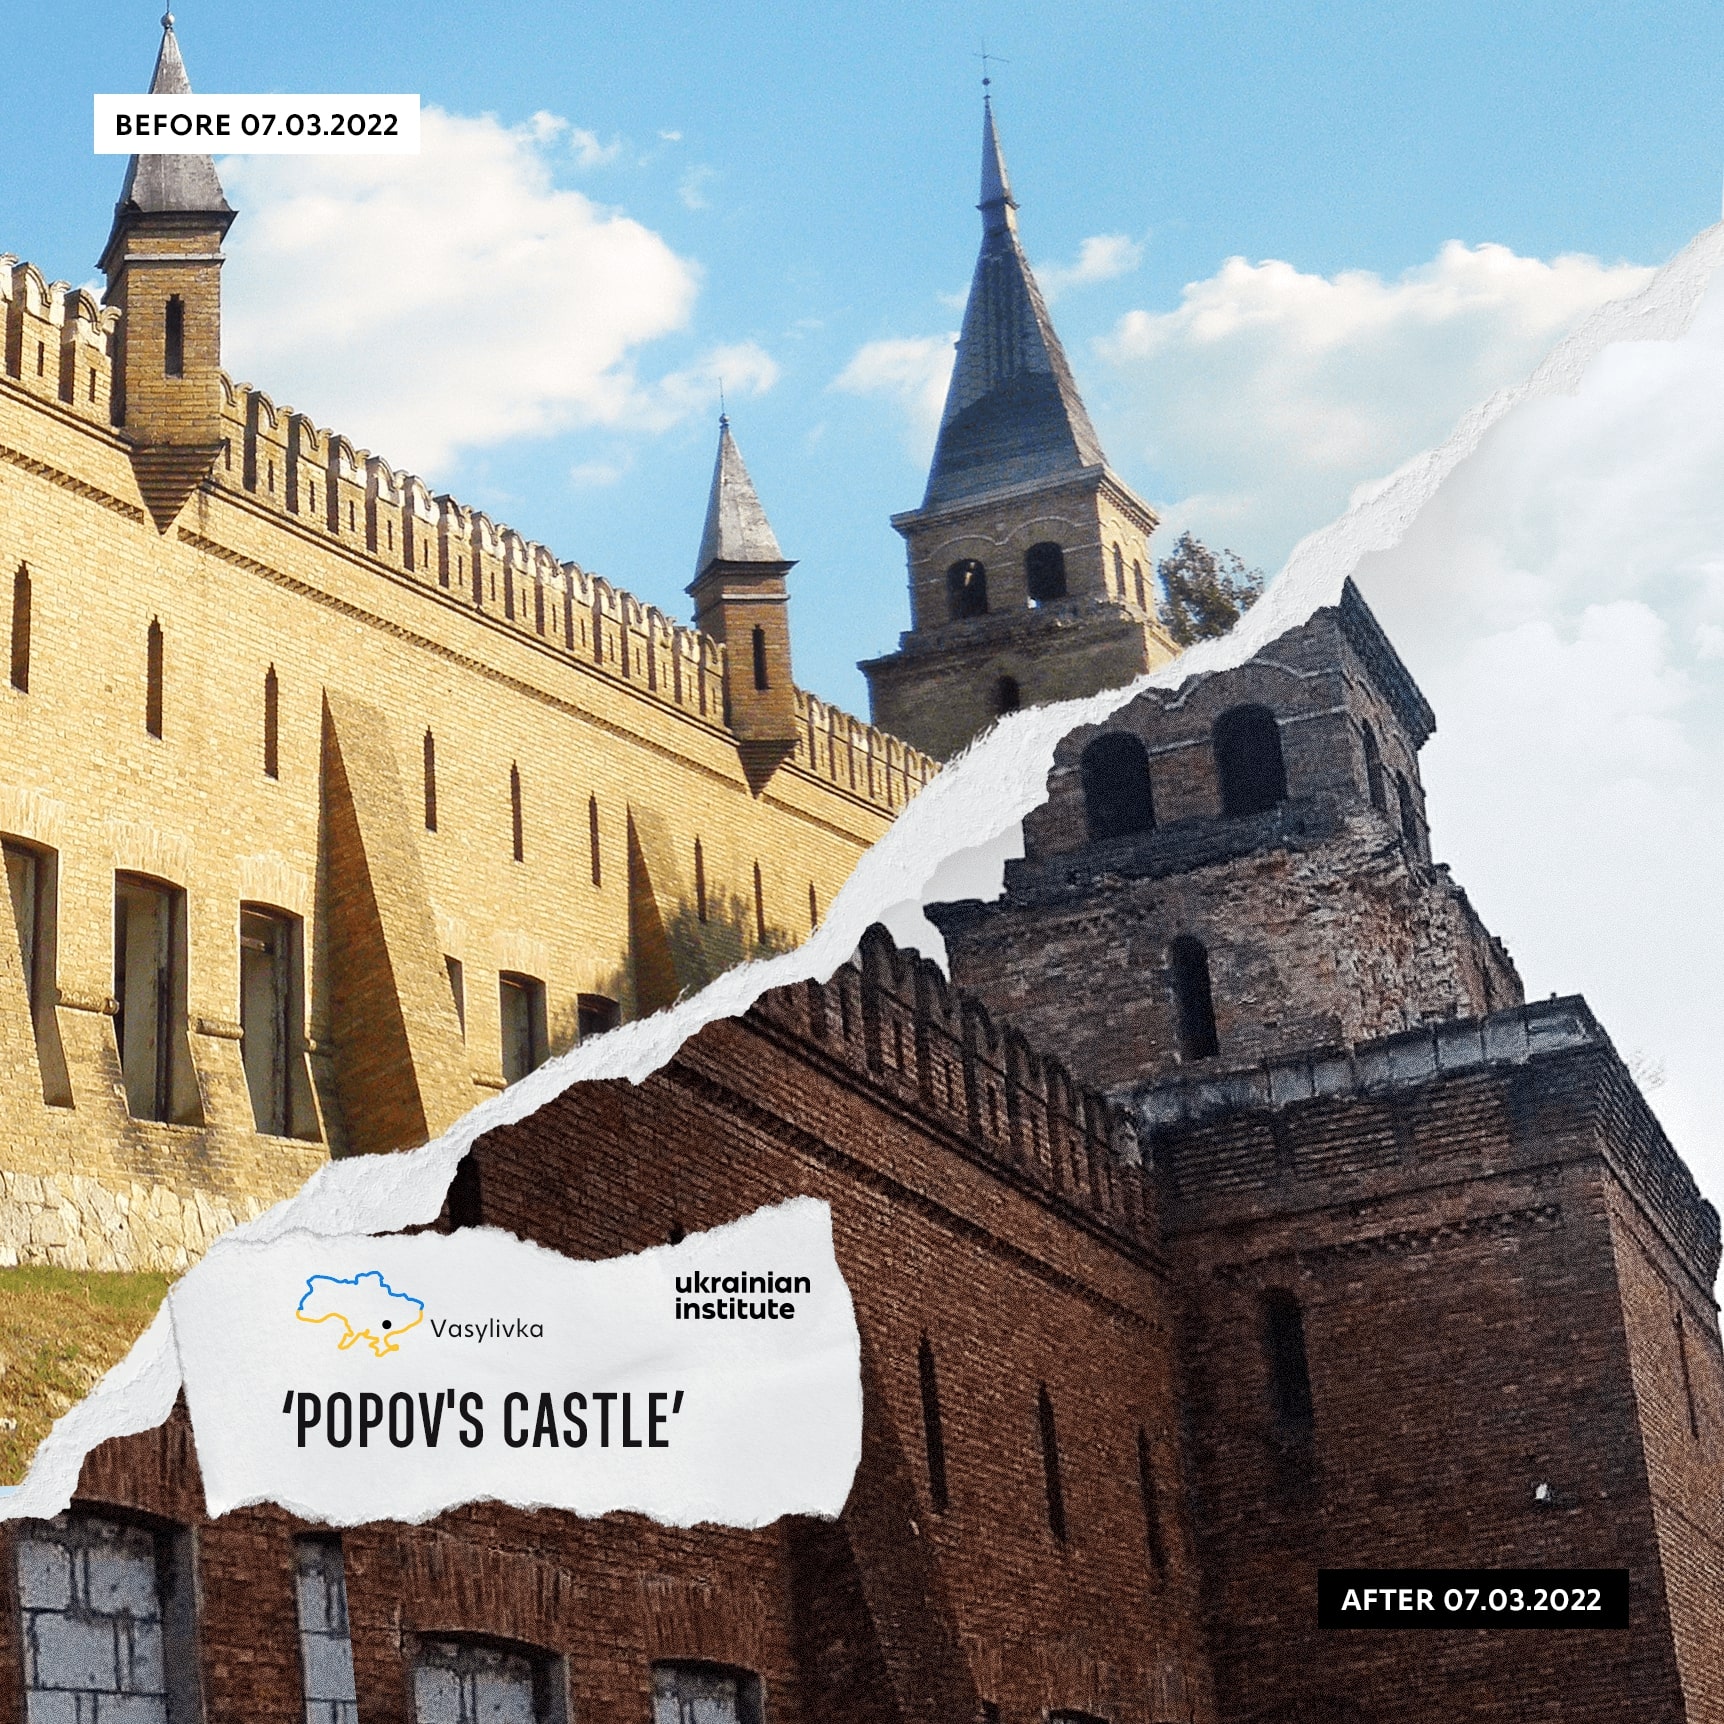 Popov's Castle